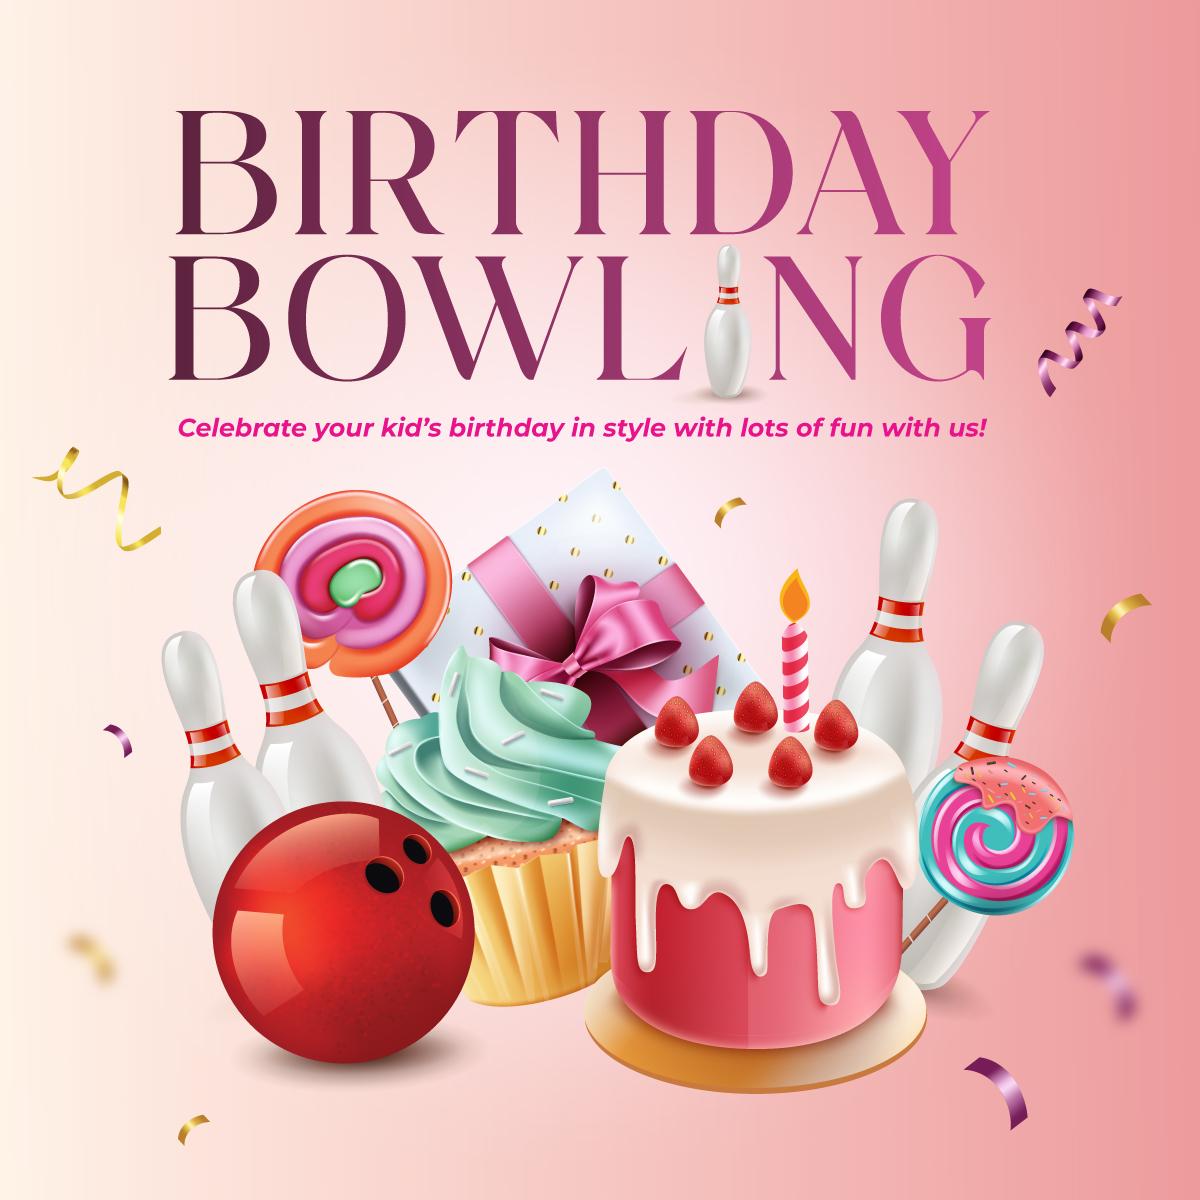 Birthday Bowling